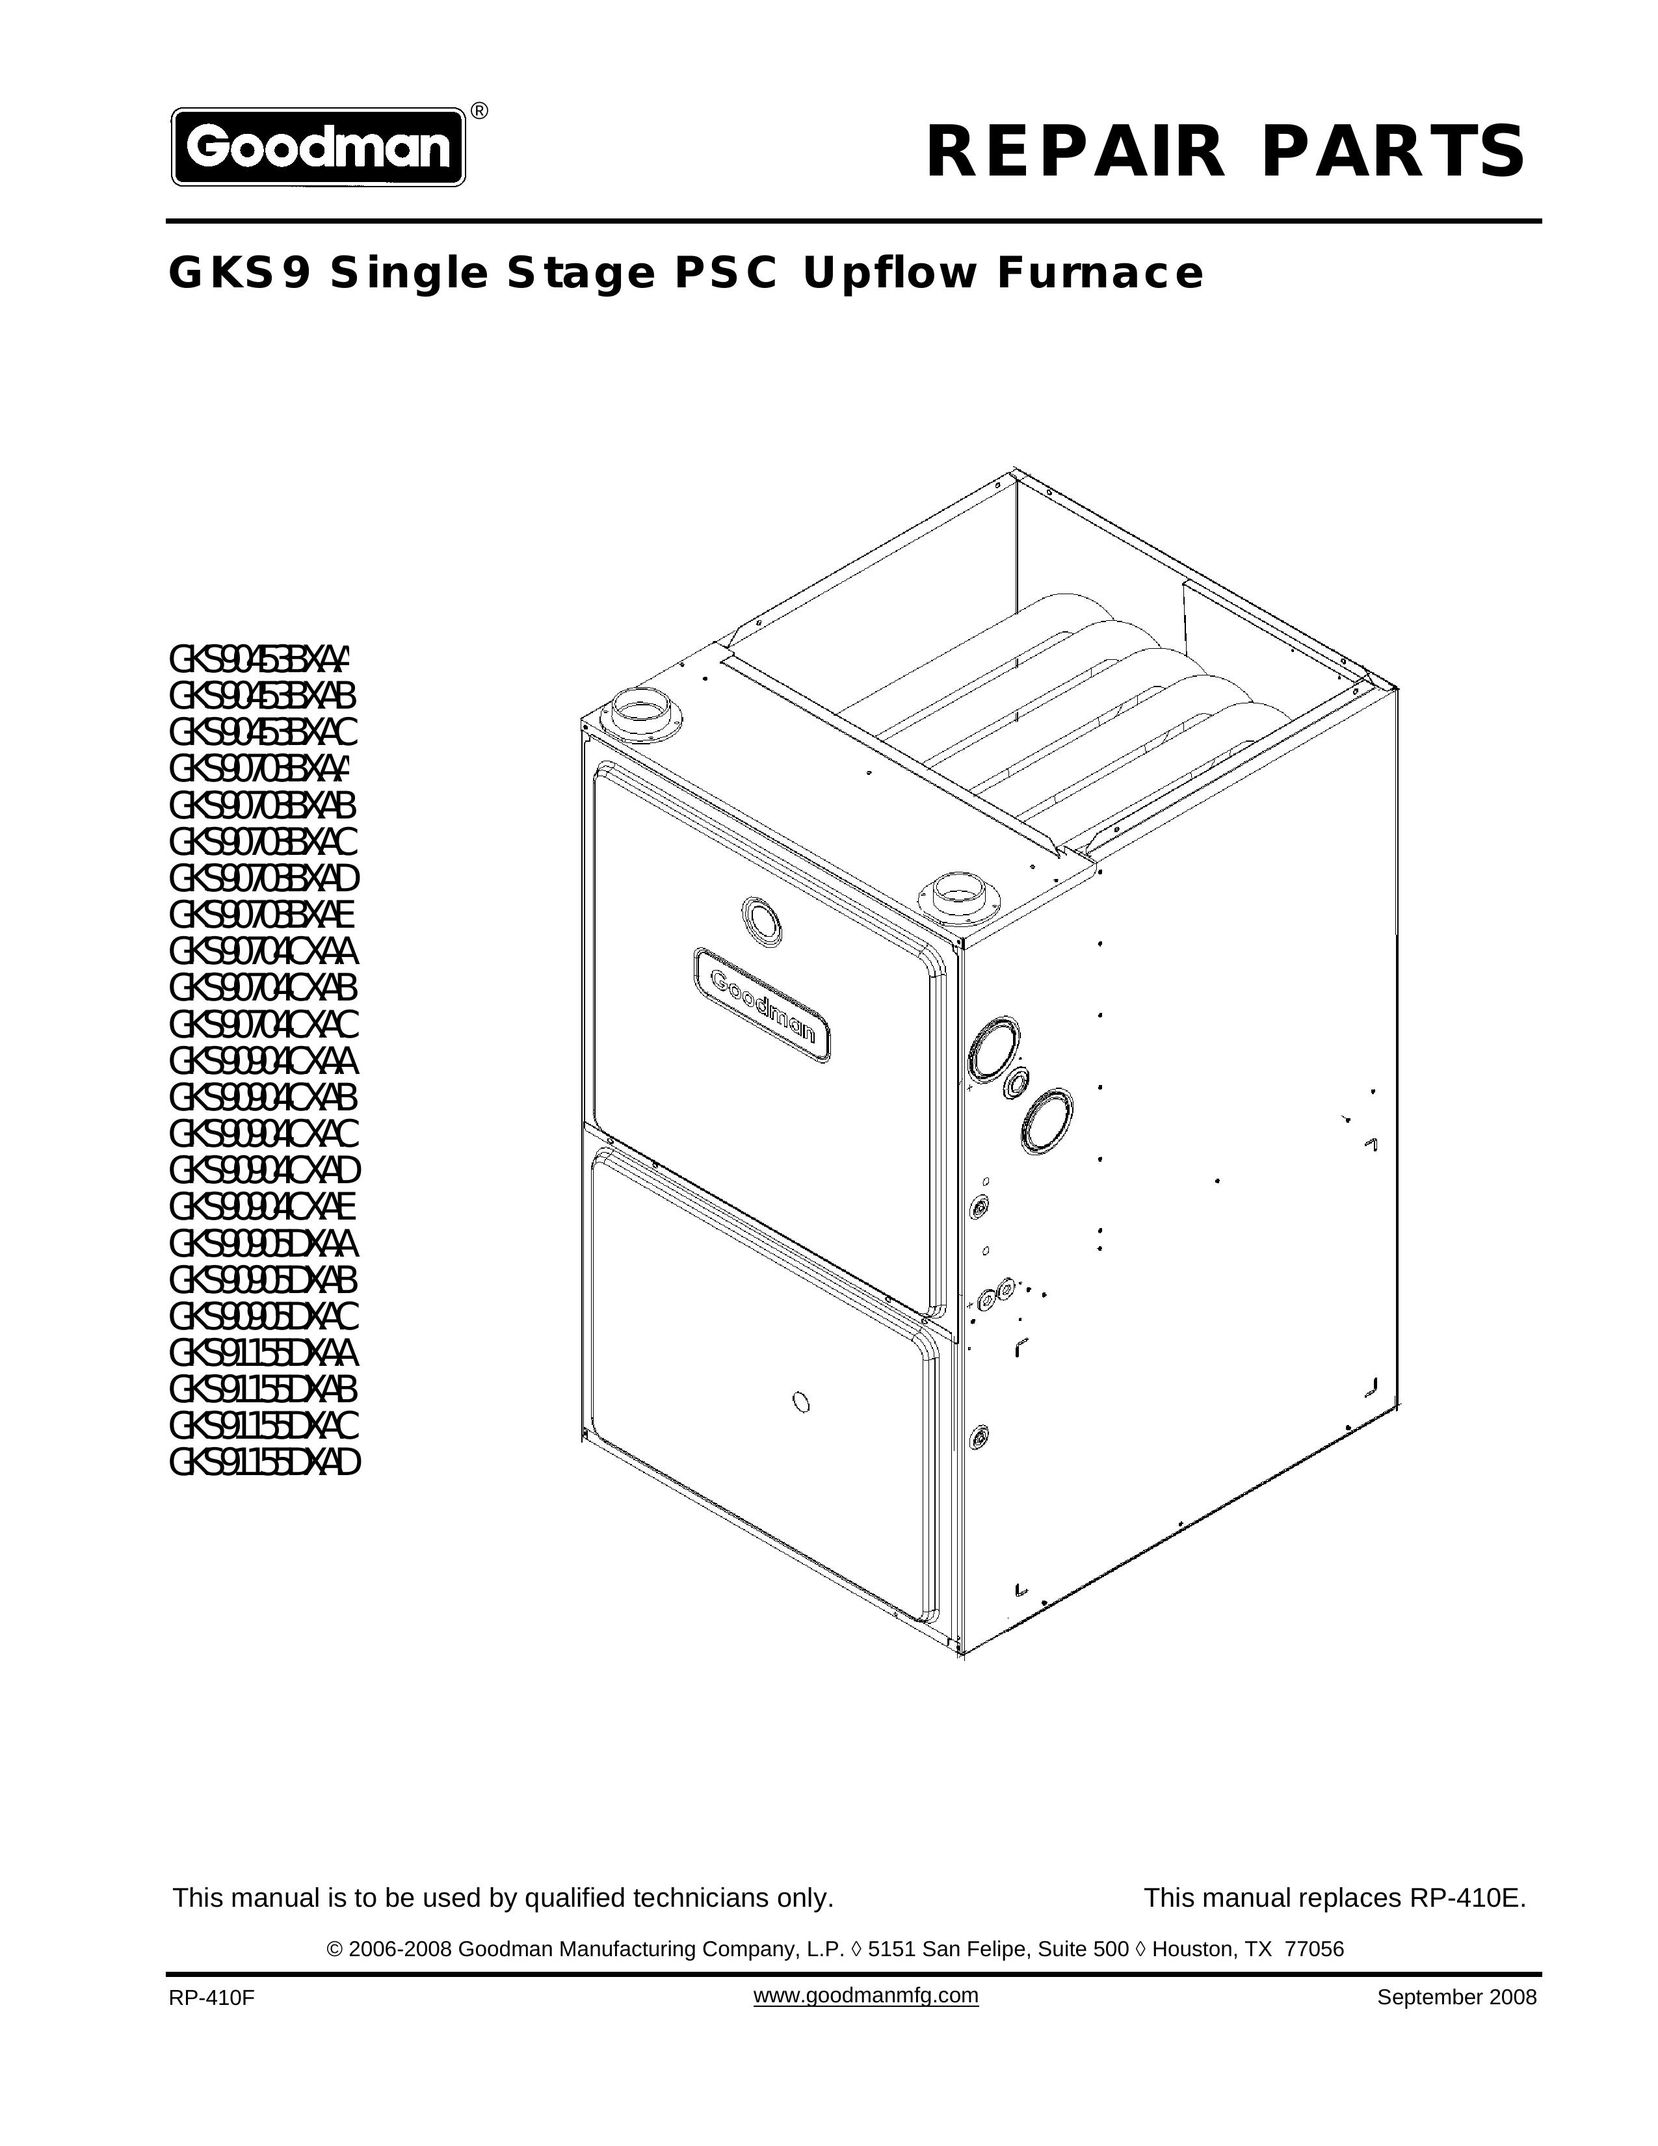 Goodman Mfg GKS90703BXAC Furnace User Manual